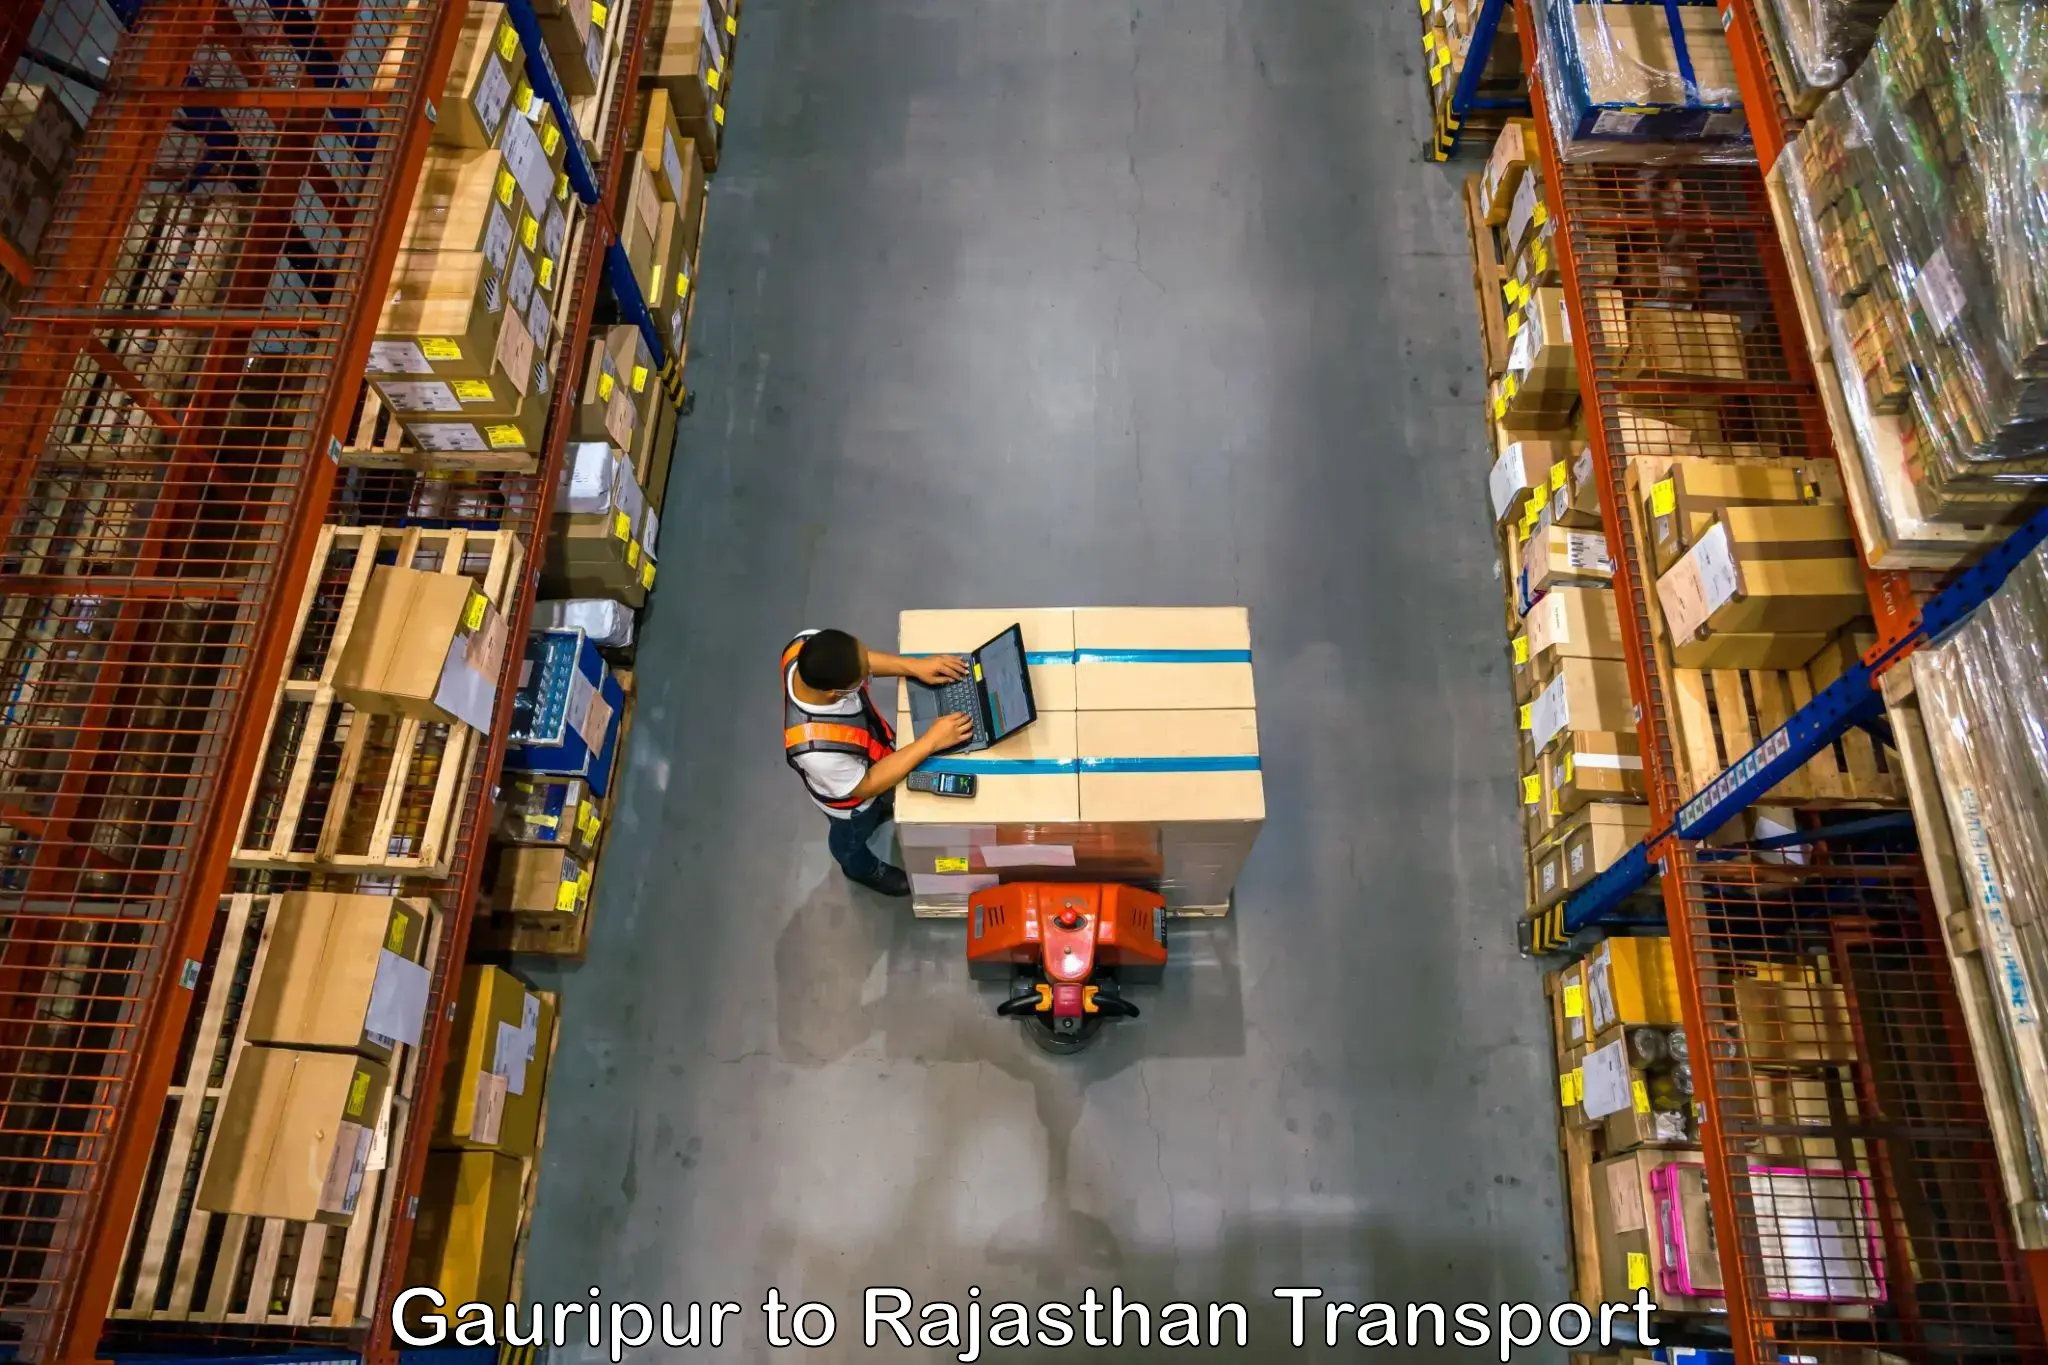 Delivery service Gauripur to Malpura